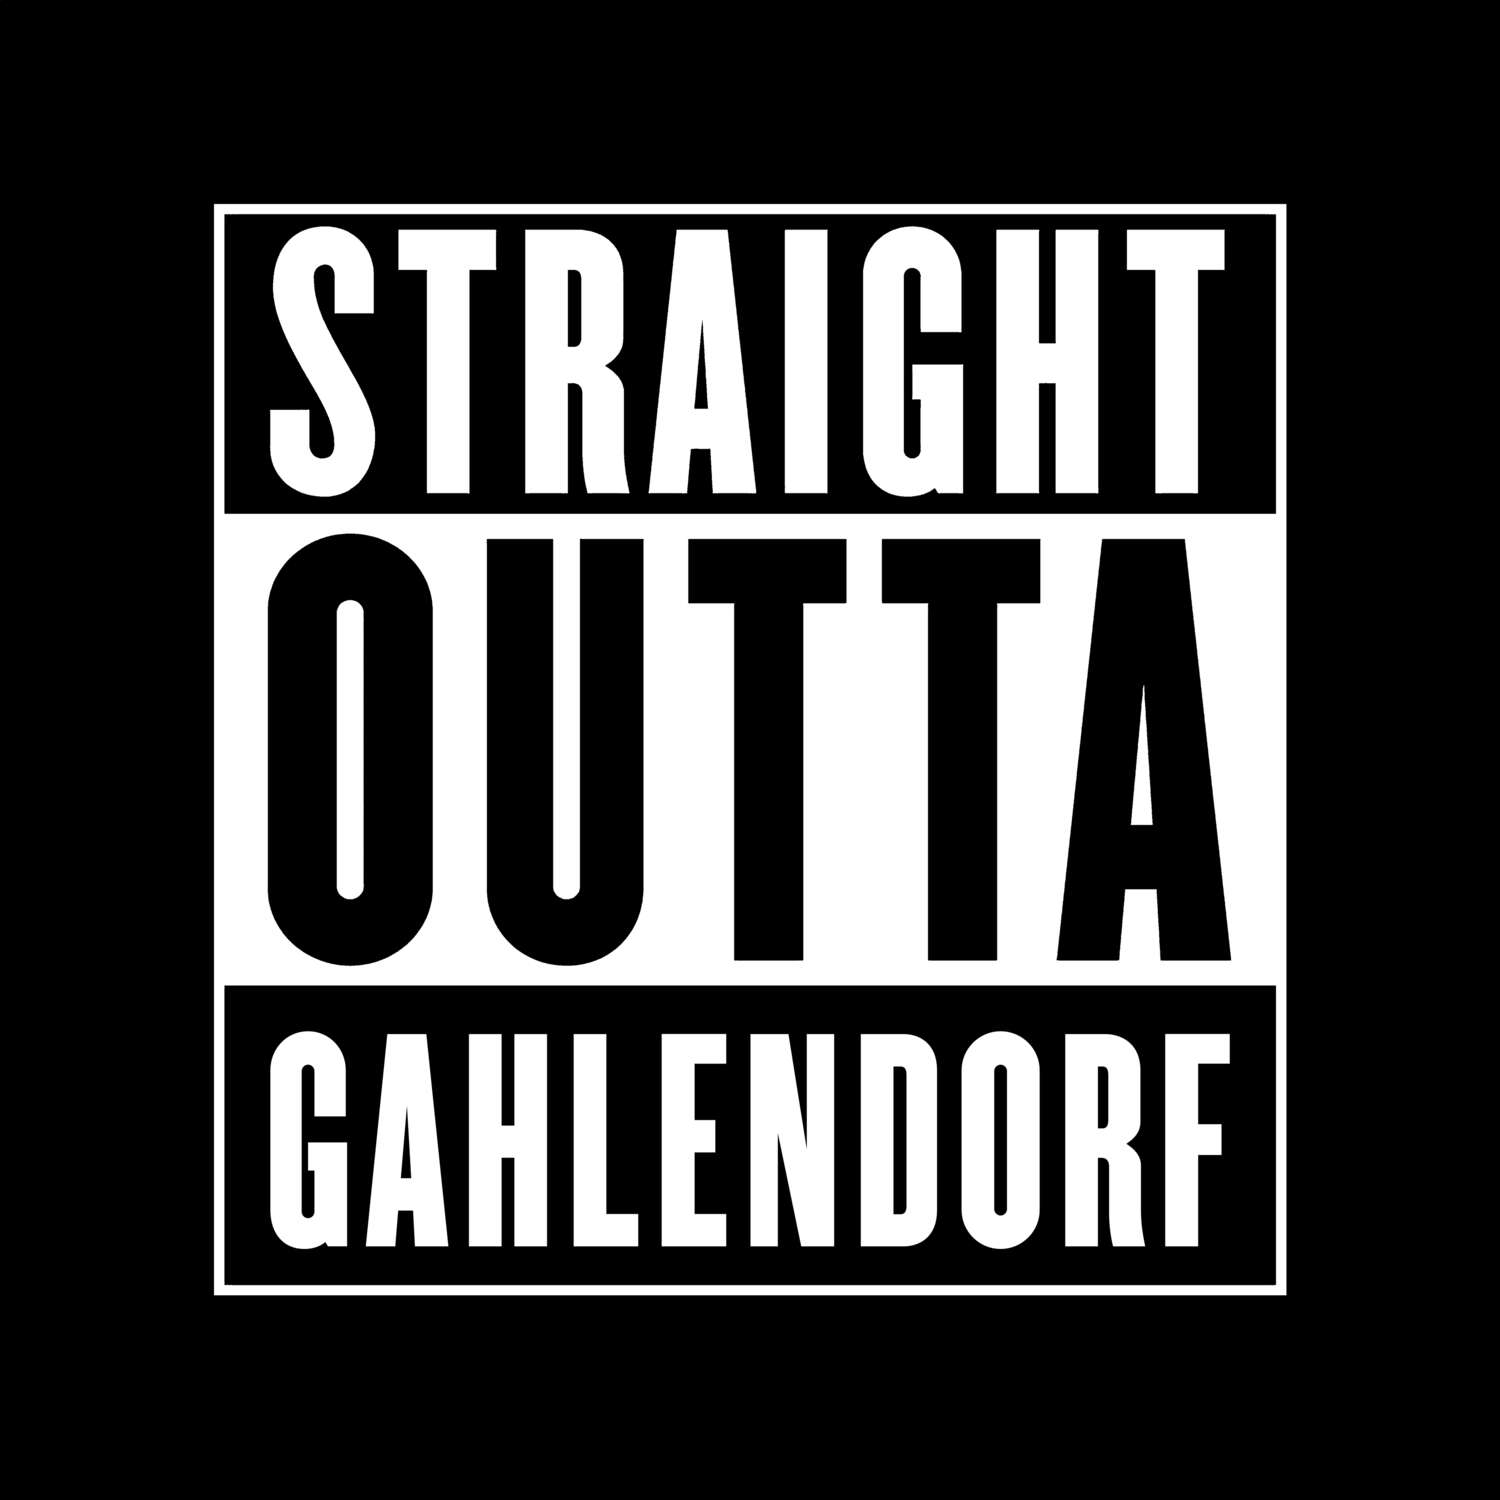 Gahlendorf T-Shirt »Straight Outta«